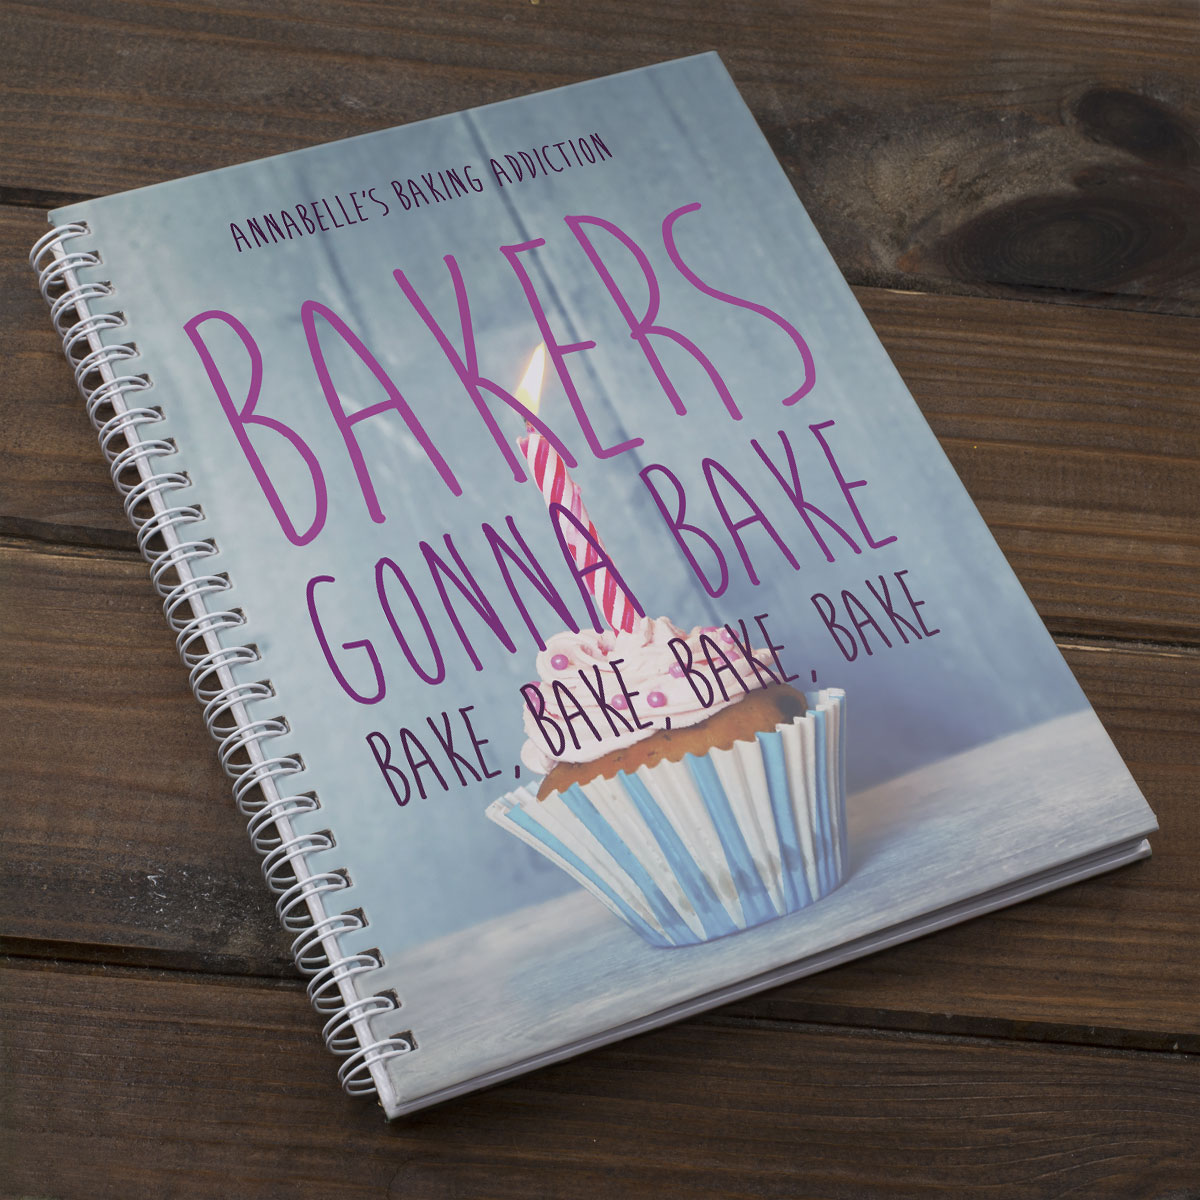 Personalised Notebook - Bakers Gonna Bake